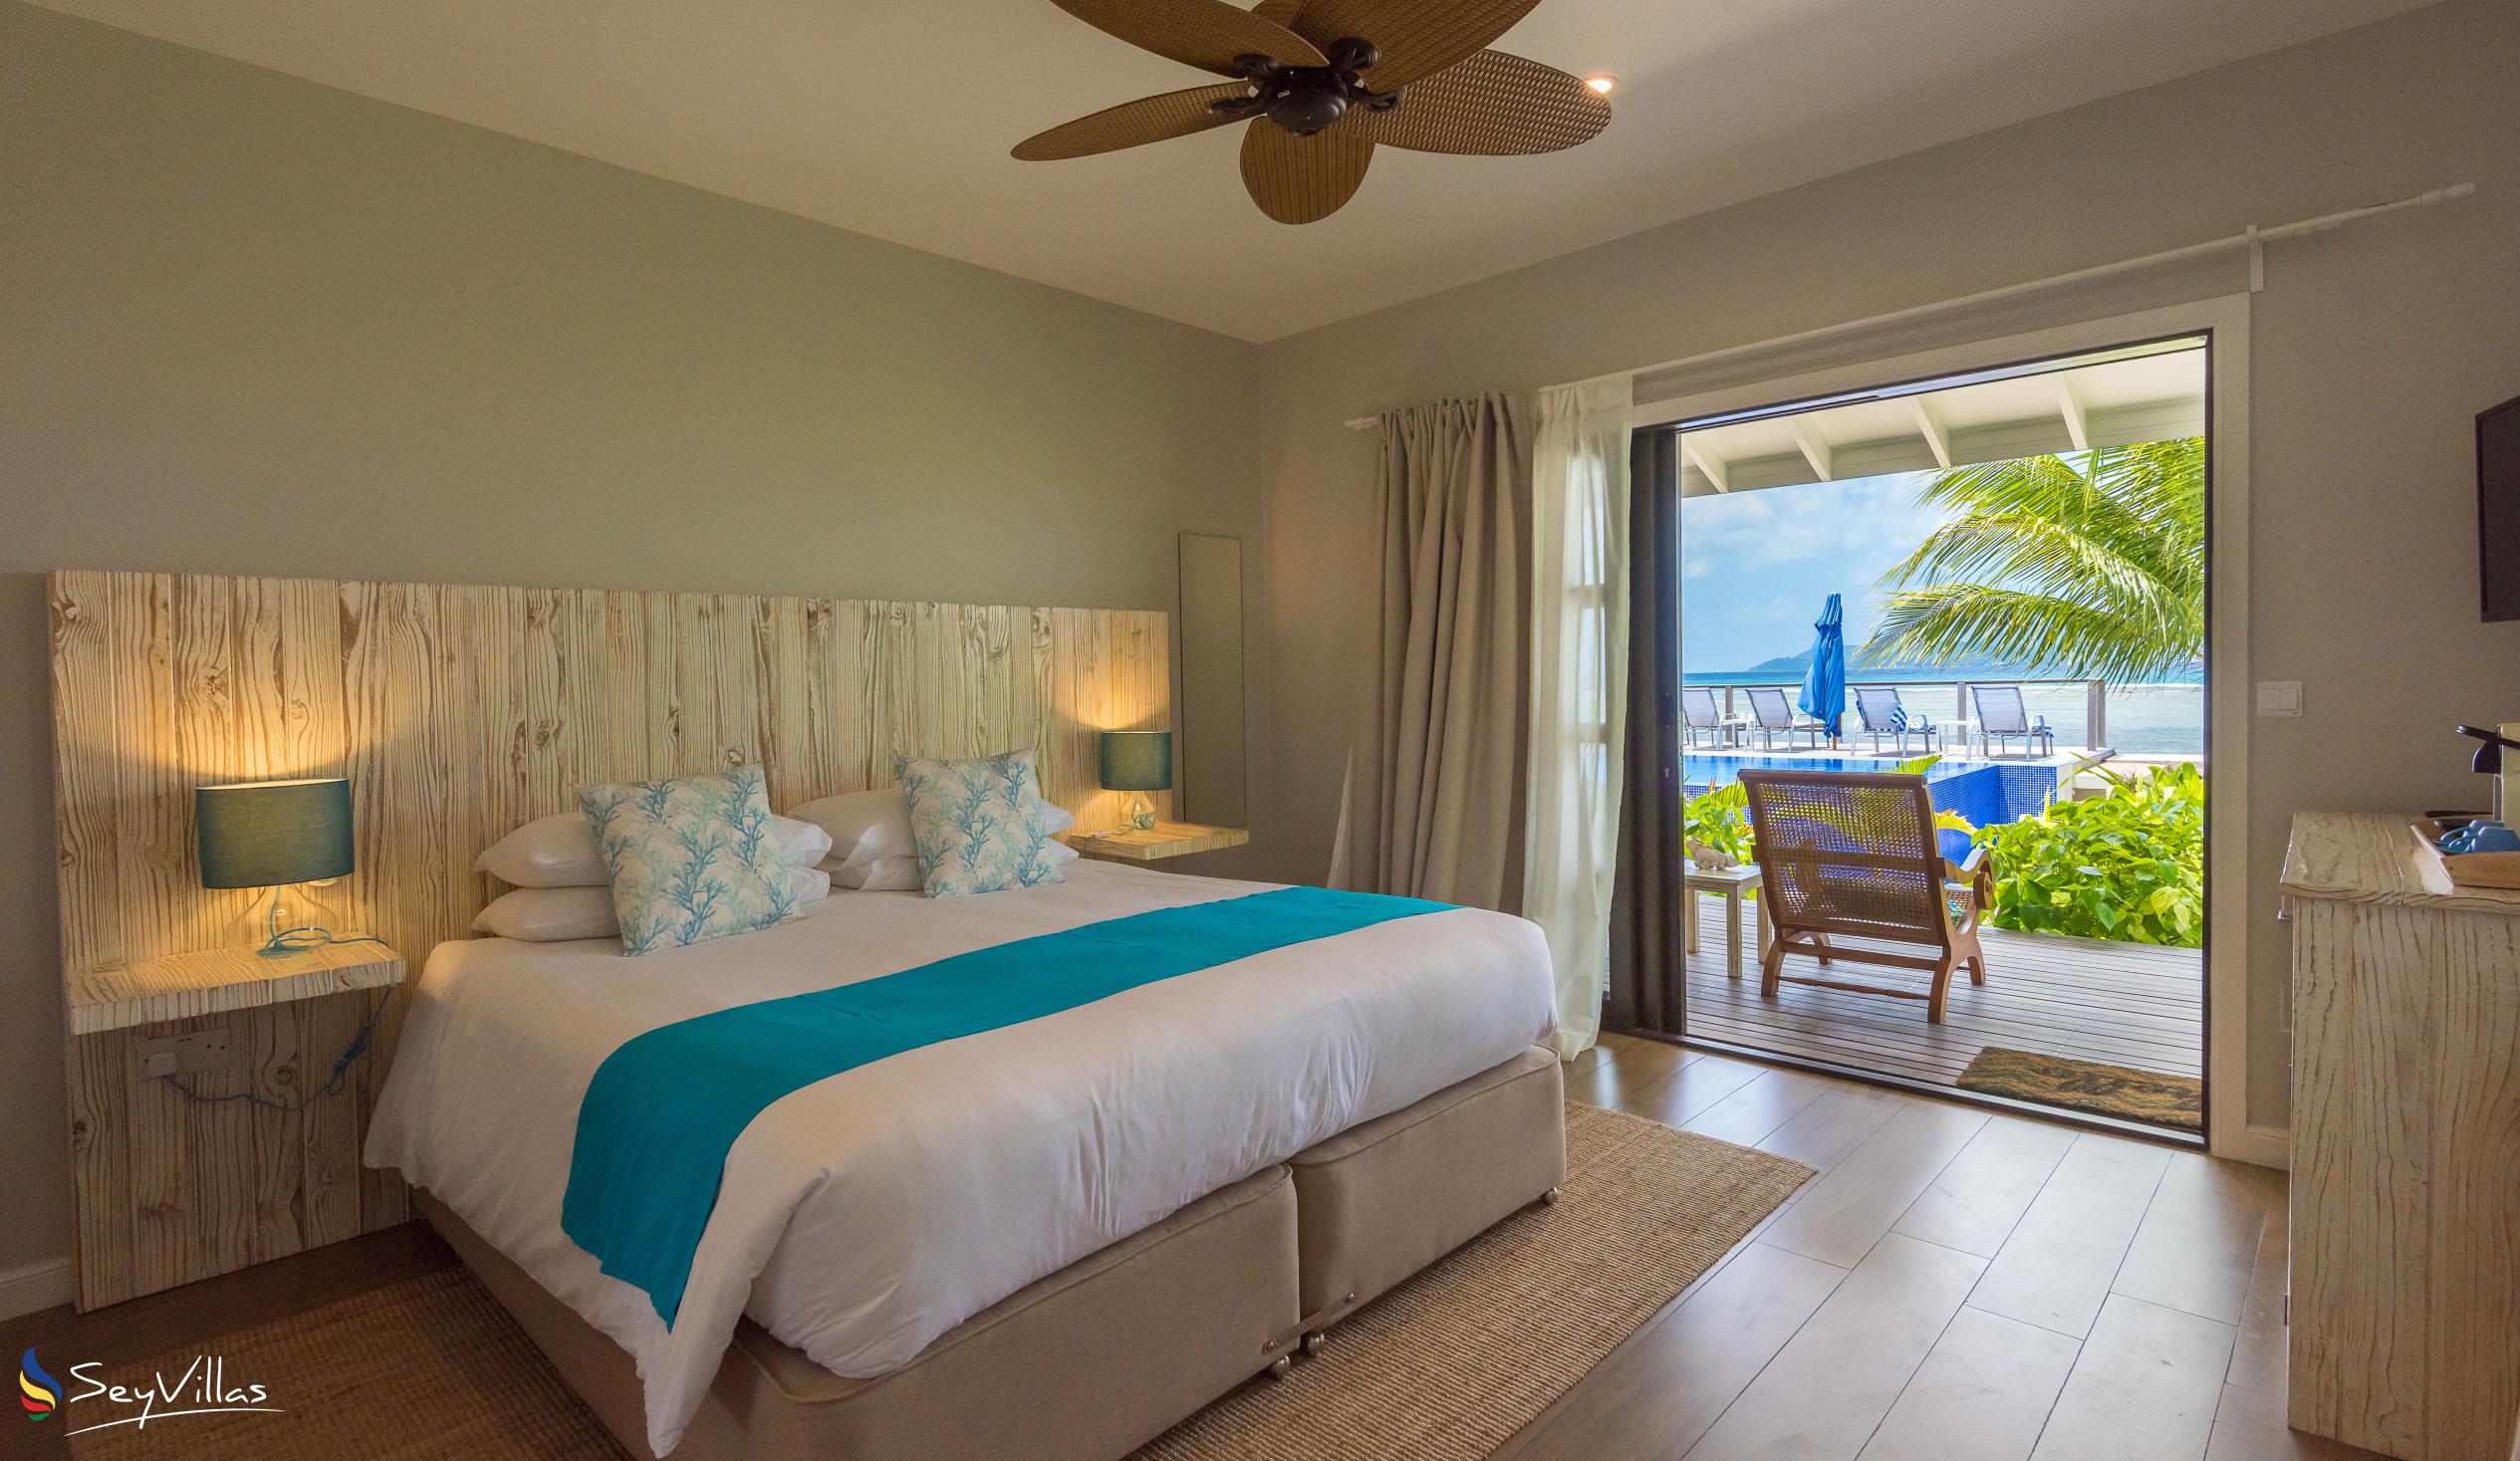 Foto 12: Le Nautique Luxury Waterfront Hotel - Meerblickzimmer mit Kingsize-Bett - La Digue (Seychellen)